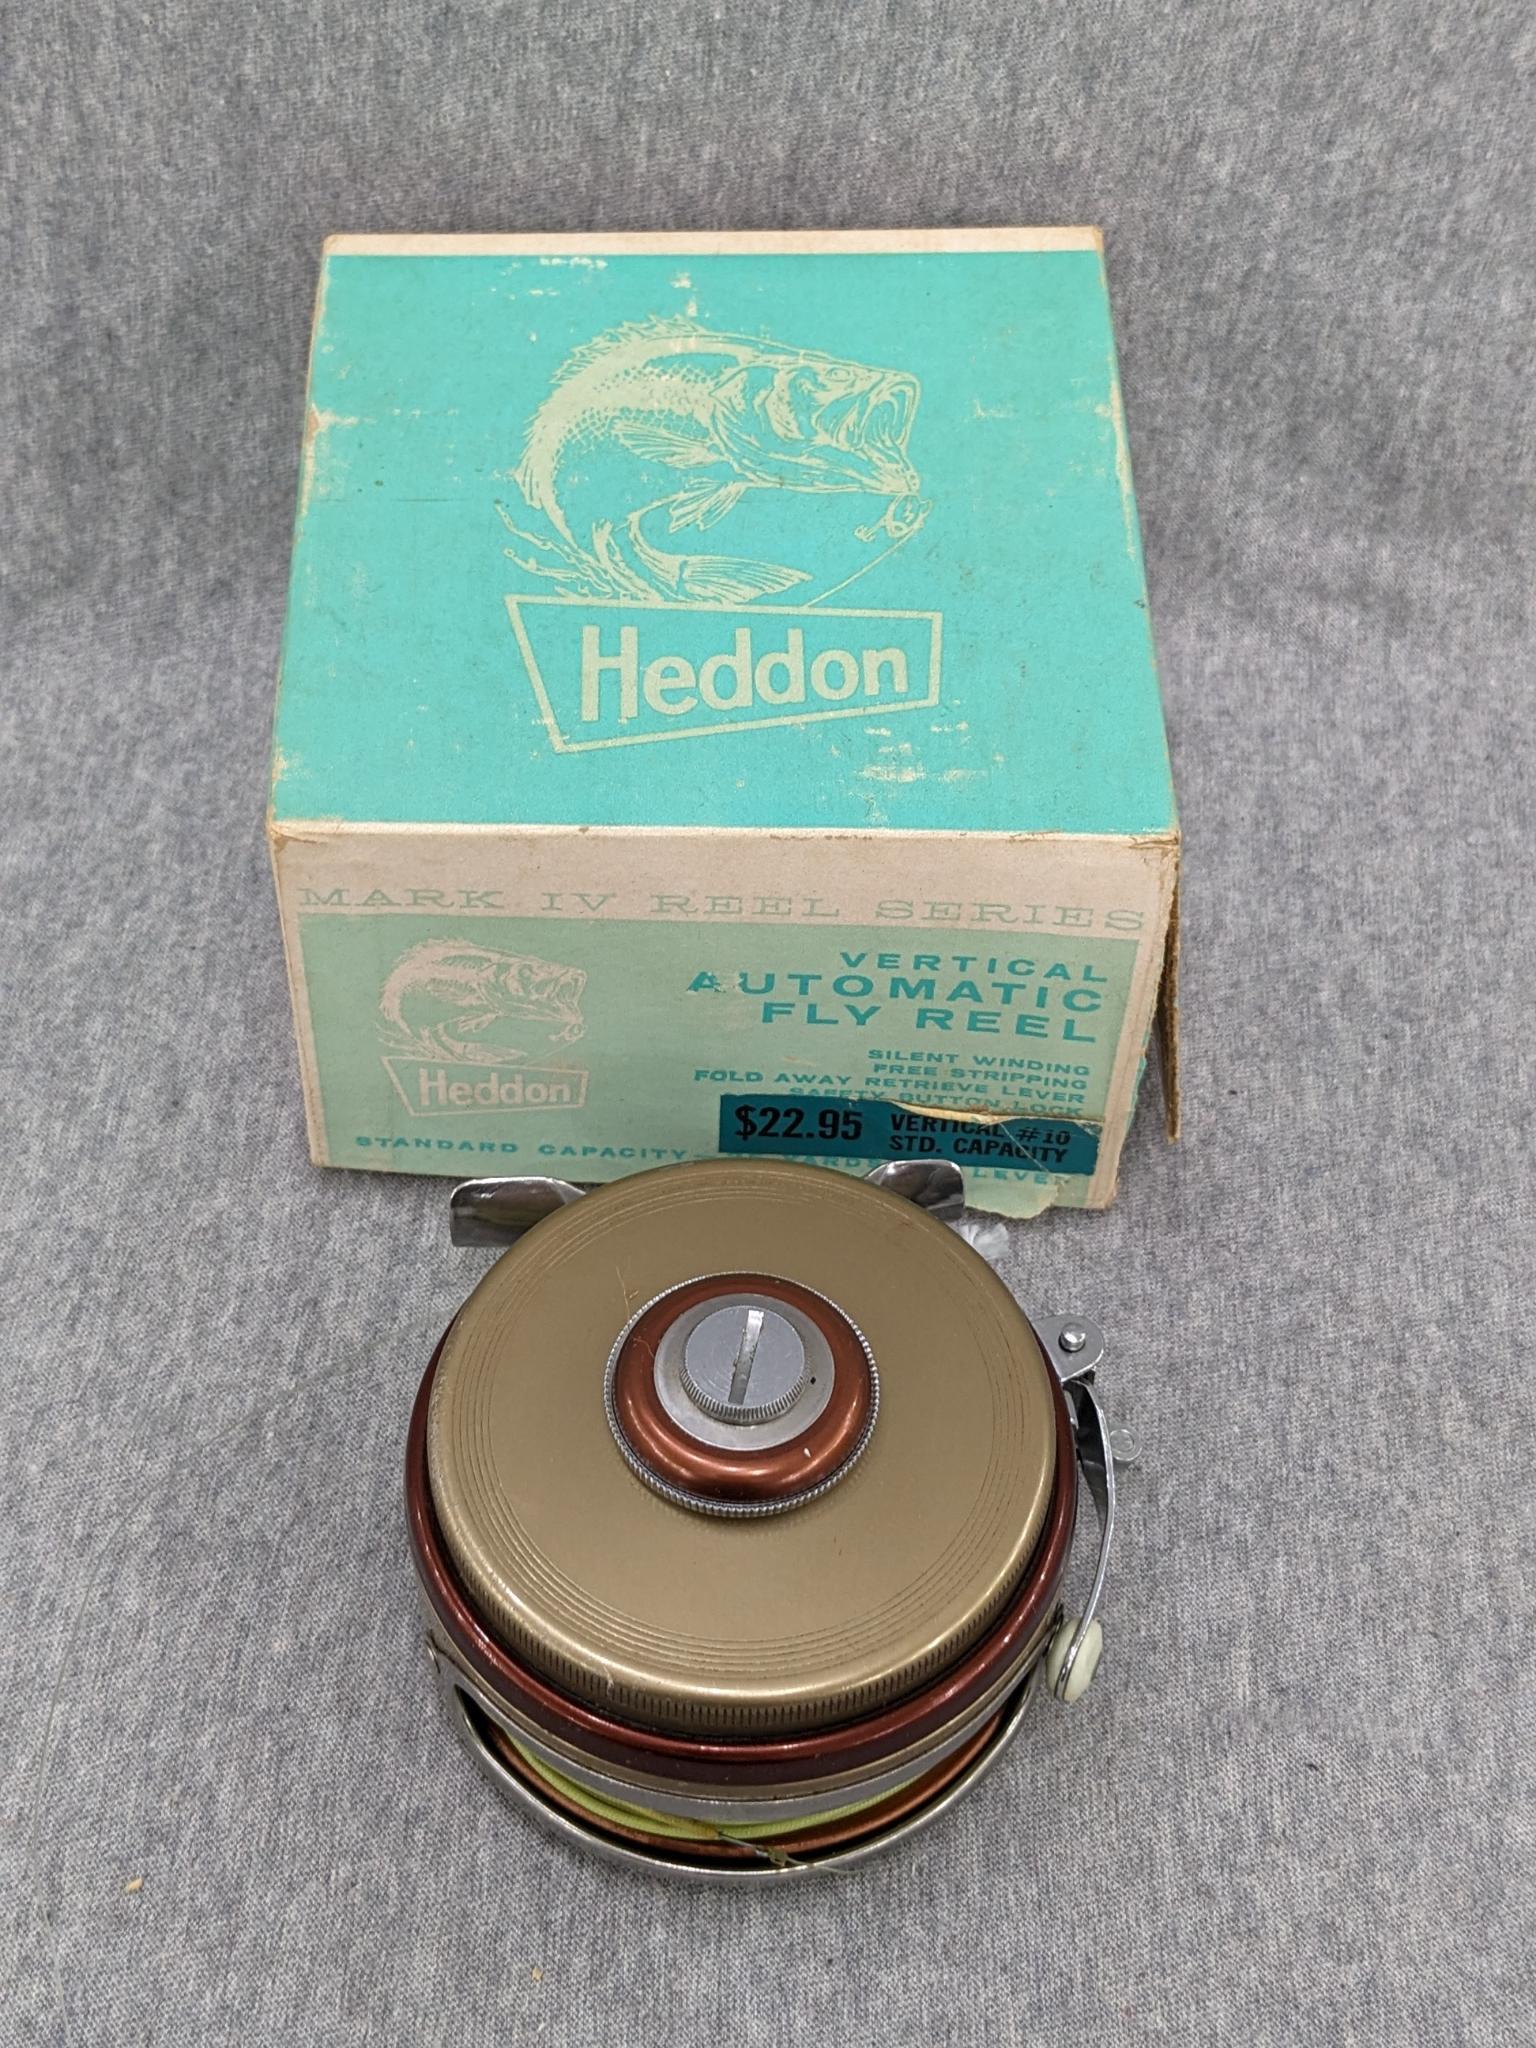 Vintage Heddon Mark IV Model 10 automatic fly